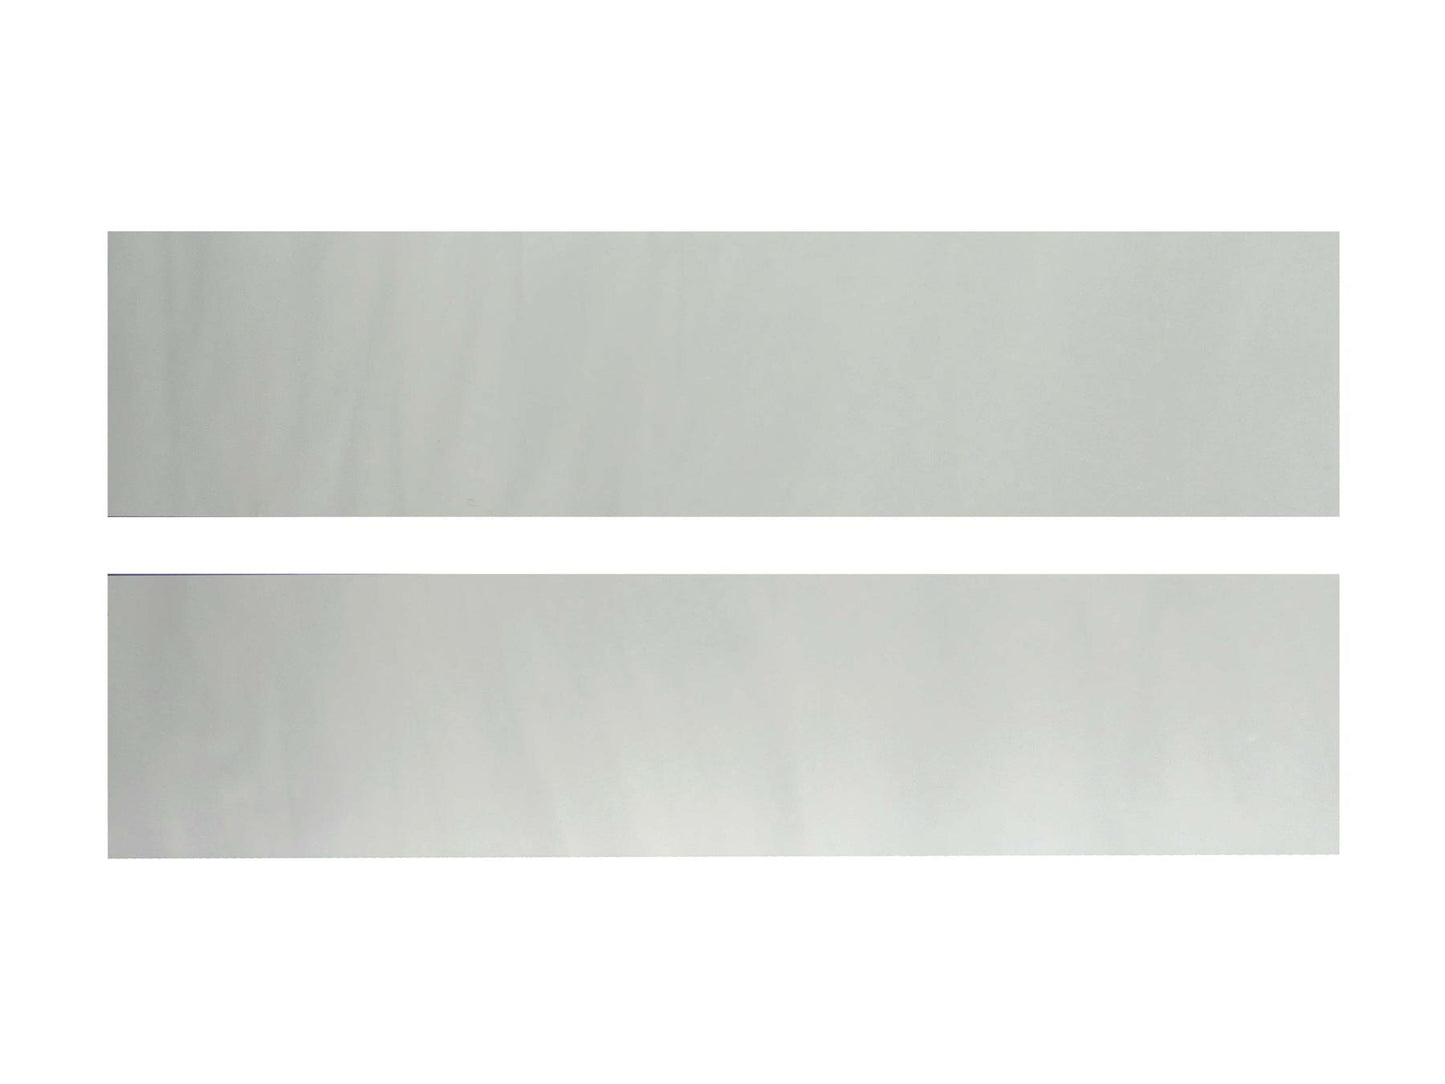 Turners' Mill White Pearl Kirinite Acrylic Knife Scales (Pair) - 152.4x38.1x6.35mm (6x1.5x0.25")